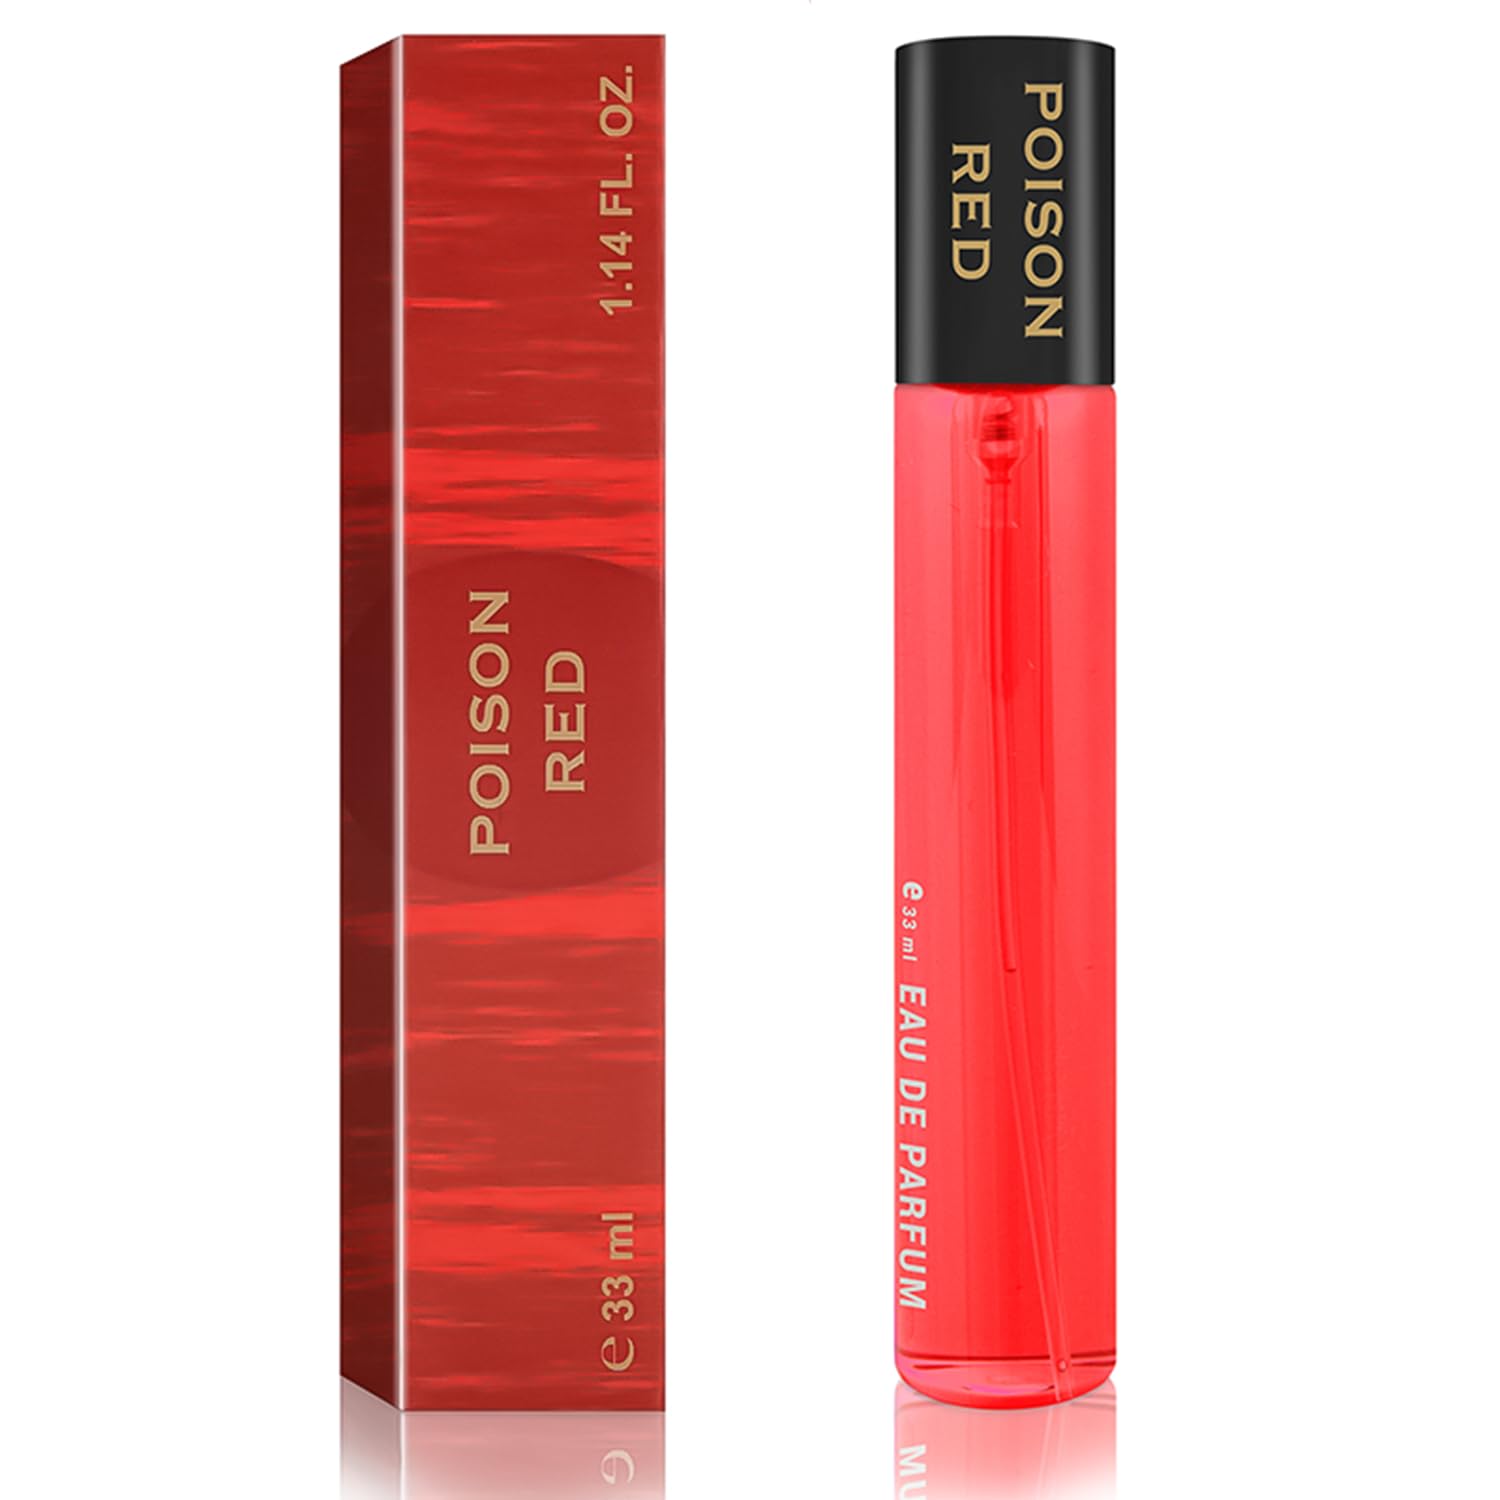 Perfume Women\'s Fragrance Spray - The Inspired Pendant as Eau de Parfum for Driver and Car - 33 ml Bottle for Handbag & On the Go (POISON RED)